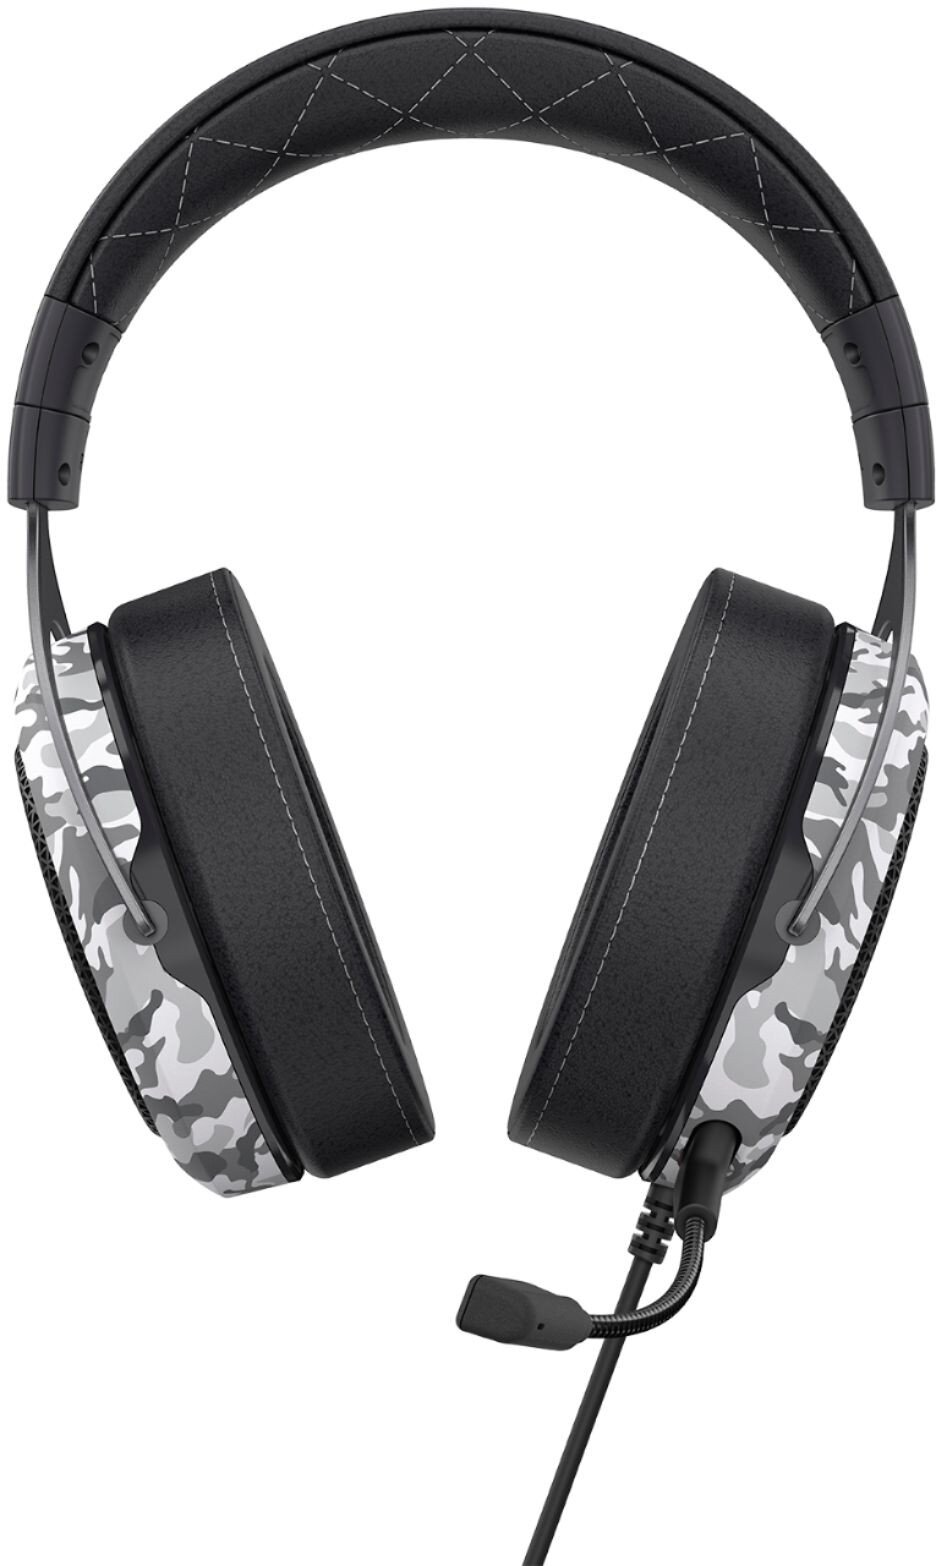 Headset Corsair Stereo Haptic online HS60 Gaming Buy Worldwide